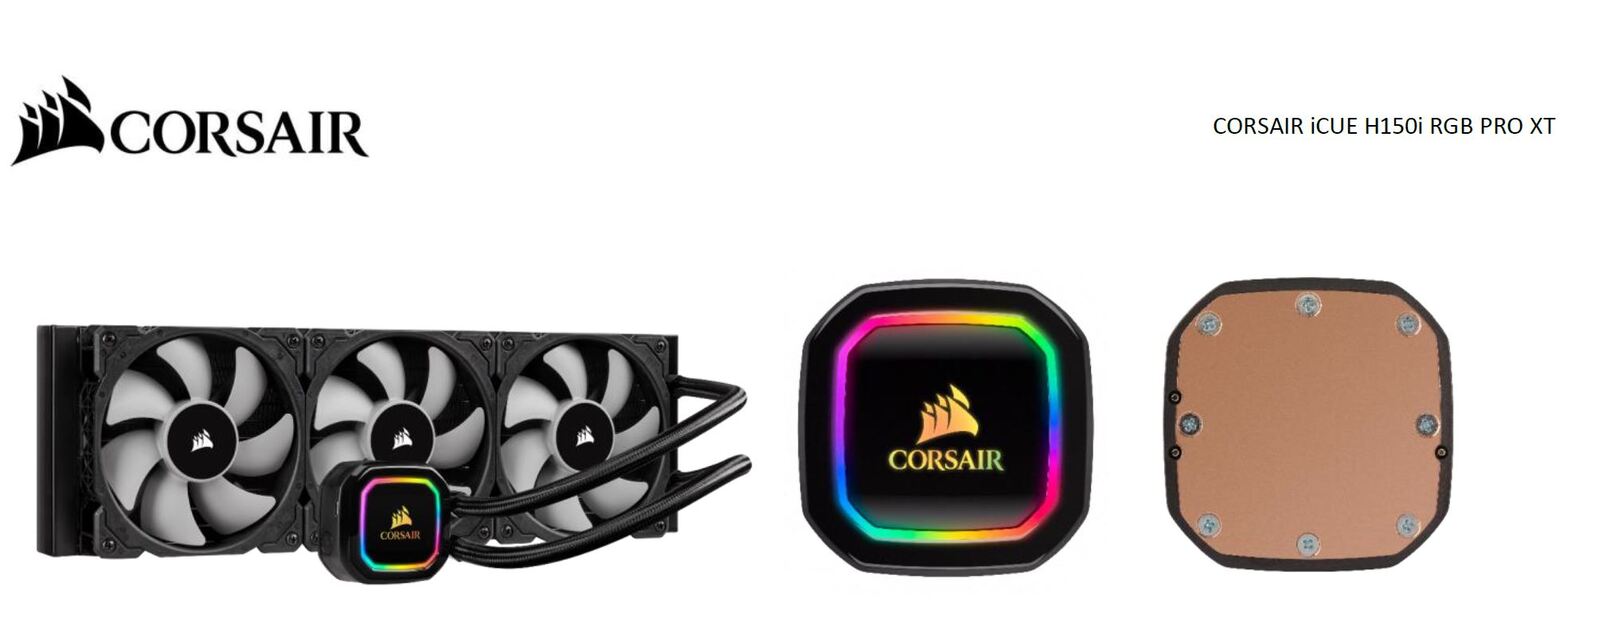 Corsair Hydro H150i RGB PRO XT 360mm Liquid CPU Cooler Triple 120mm ML PWM Fans, Advanced RGB Lighting Control. Intel 1200, 115x, 2011/2066, AMx, TR4.